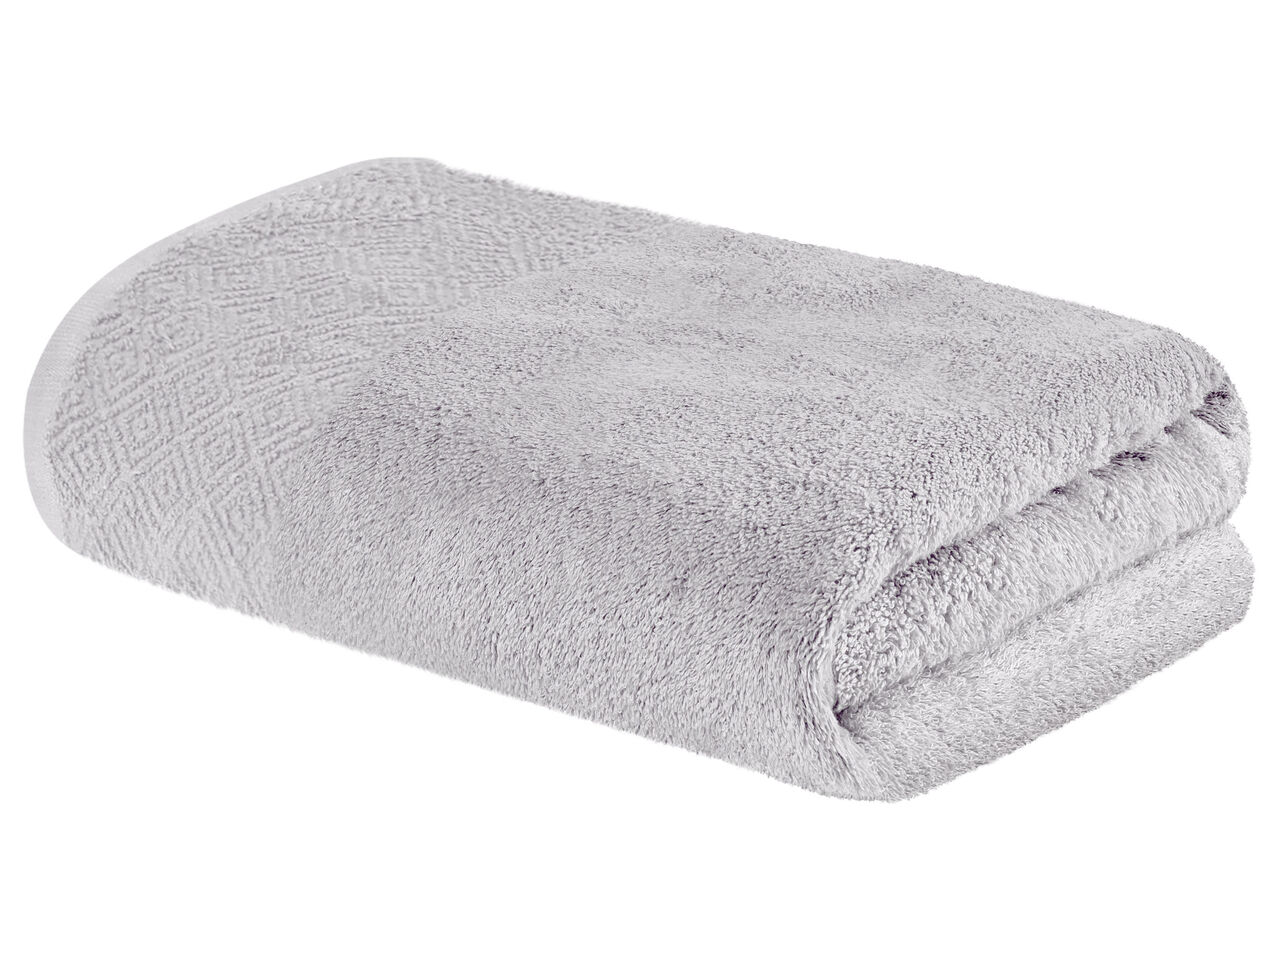 LIVARNO HOME® Ręcznik frotté 70 x 140 cm , cena 24,99 PLN 
LIVARNO HOME® Ręcznik ...